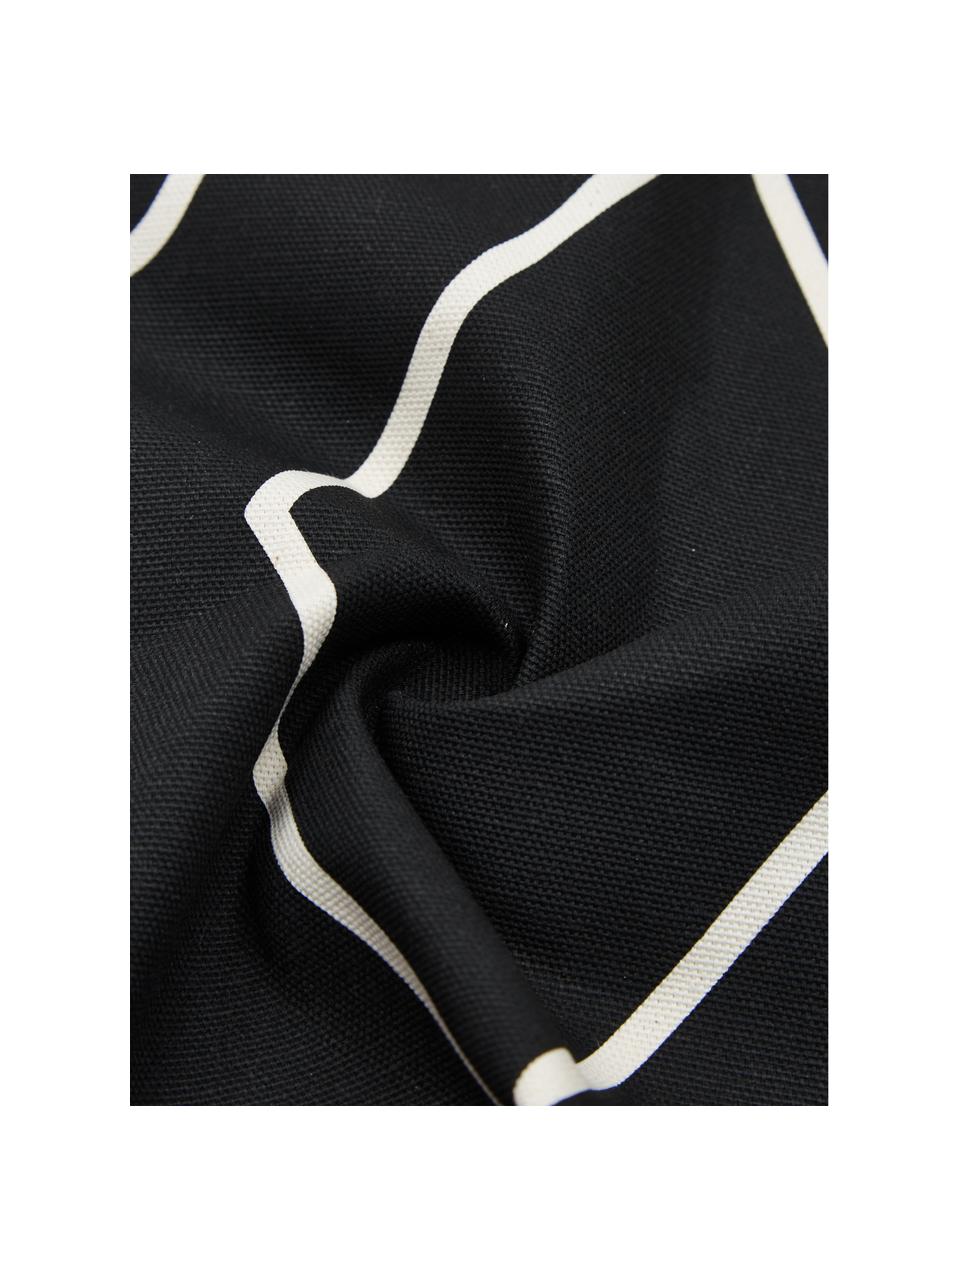 Federa arredo boho color nero/bianco crema Demi, 100% cotone, Bianco, nero, Larg. 30 x Lung. 50 cm